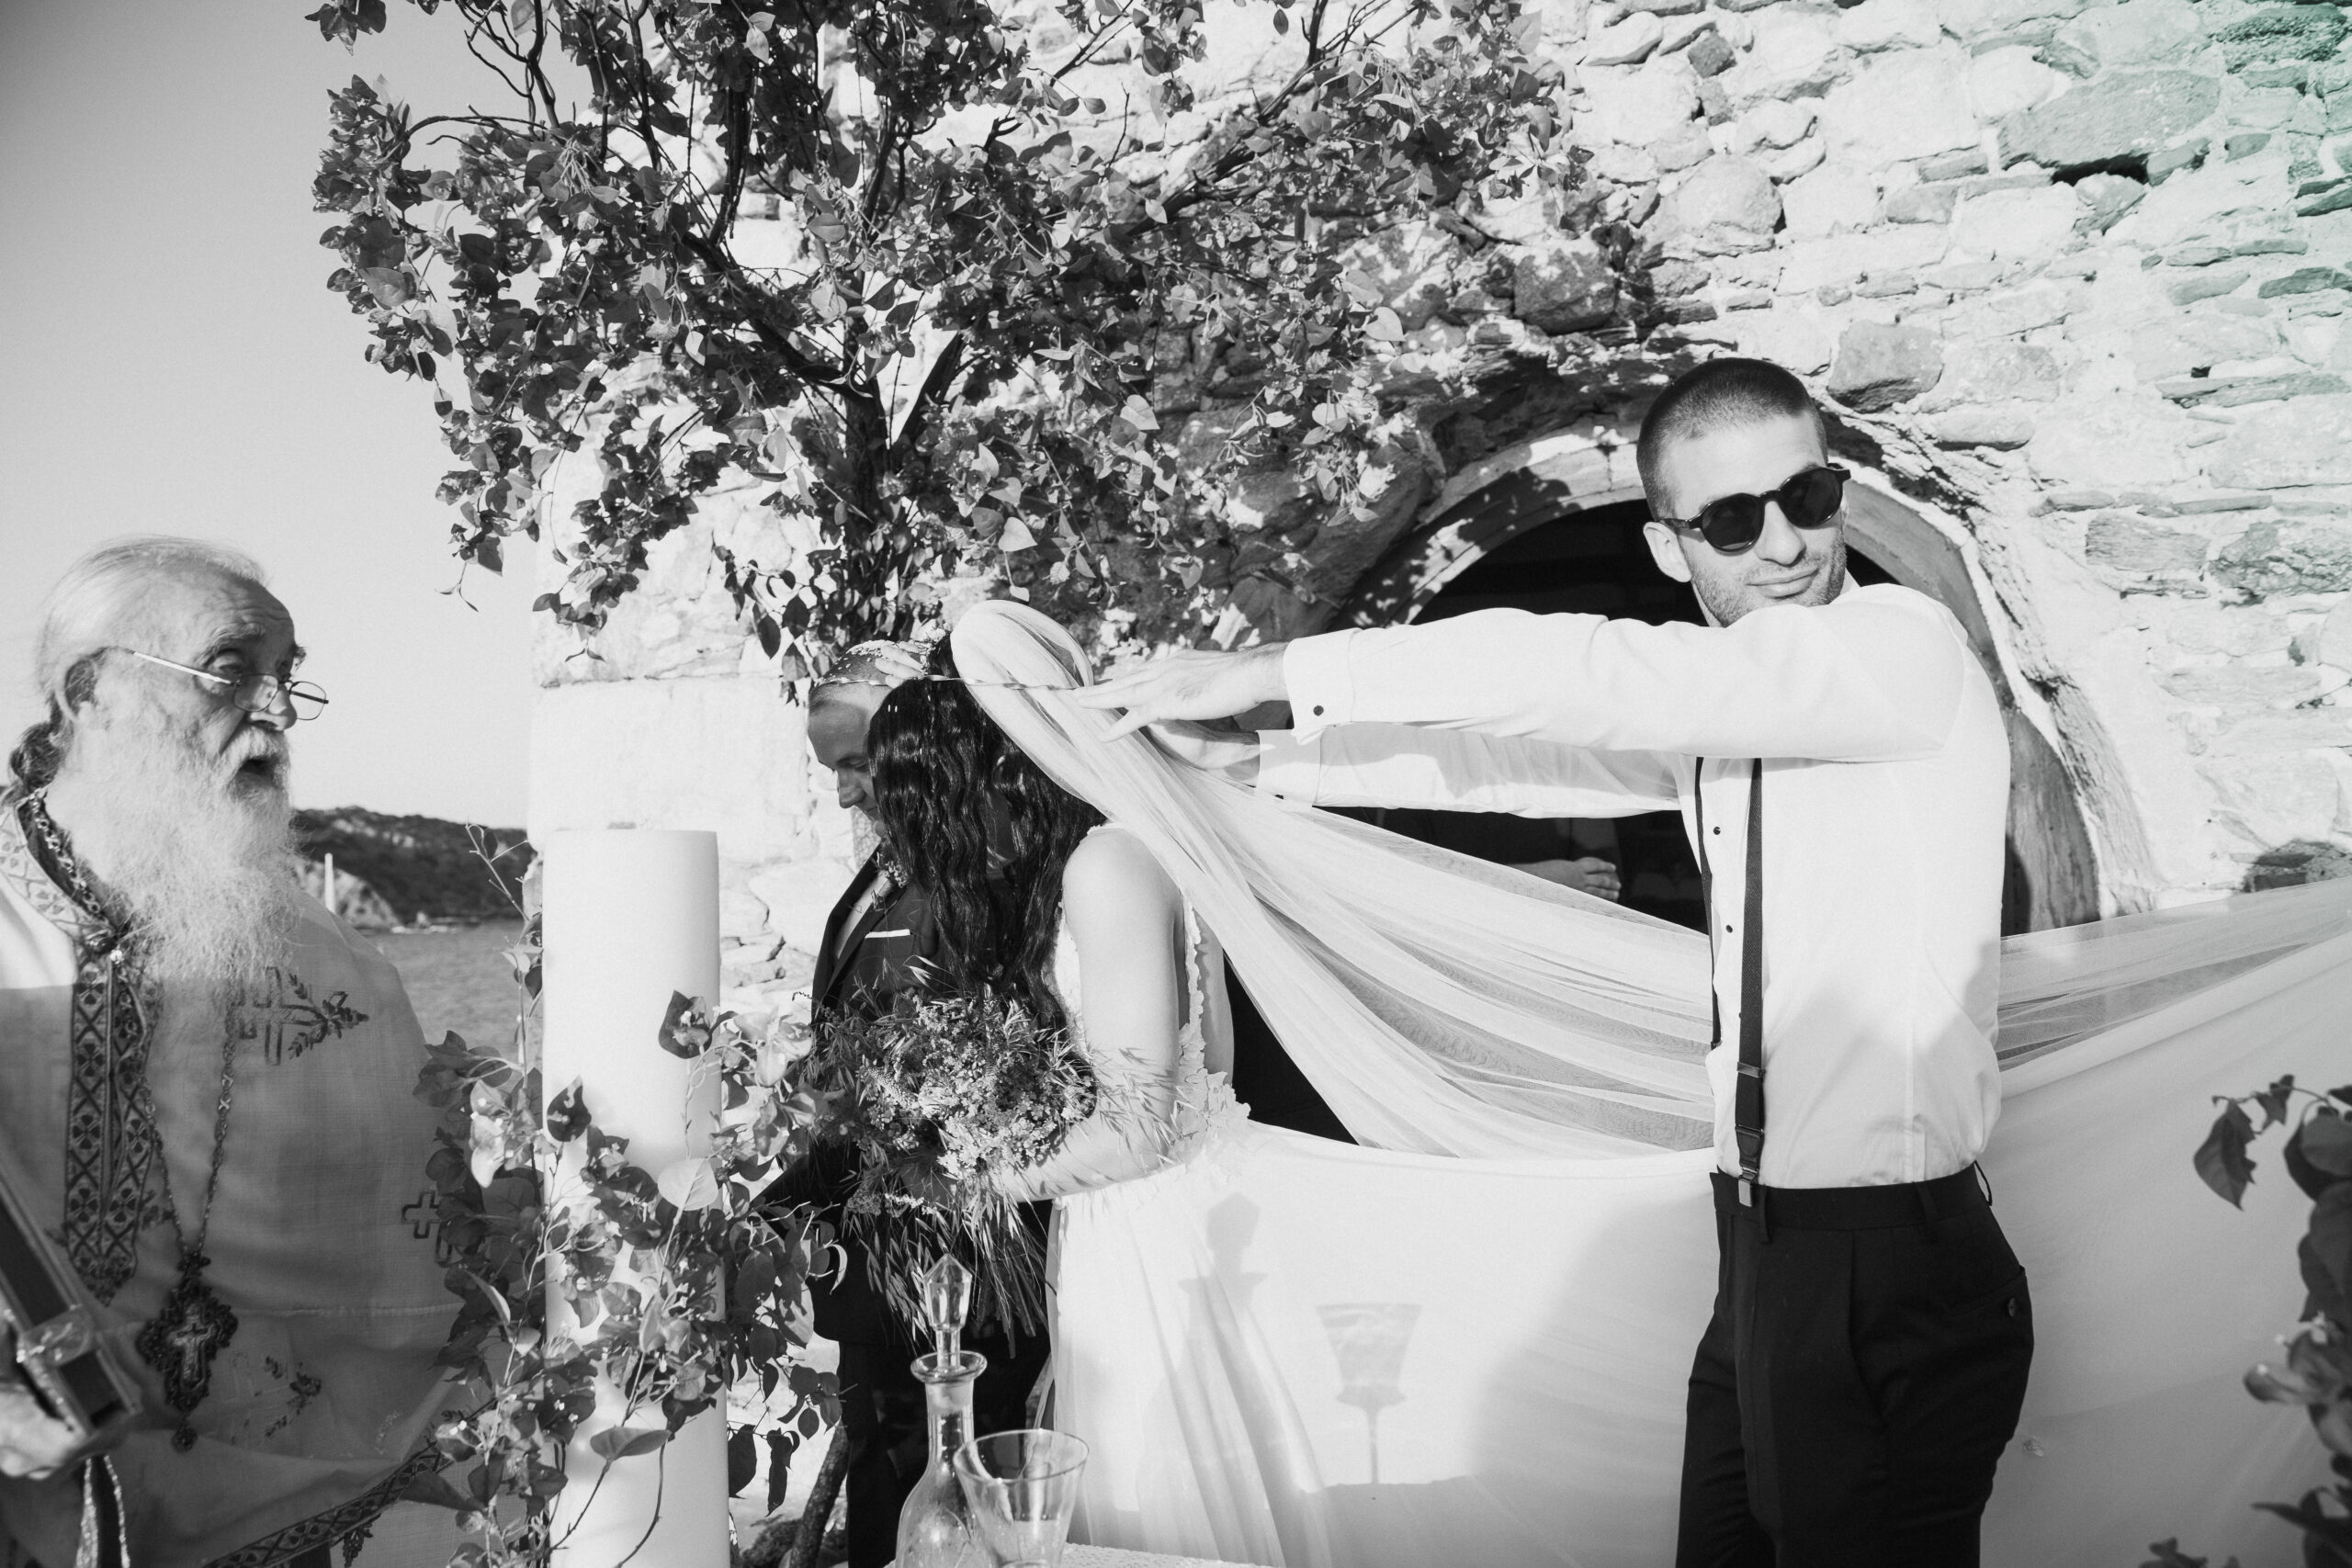 Island Athens riviera wedding in greece bougainvillea design γάμος στην Αθηναϊκή ριβιέρα με θέμα τη βουκαμβίλια διακόσμηση γάμου